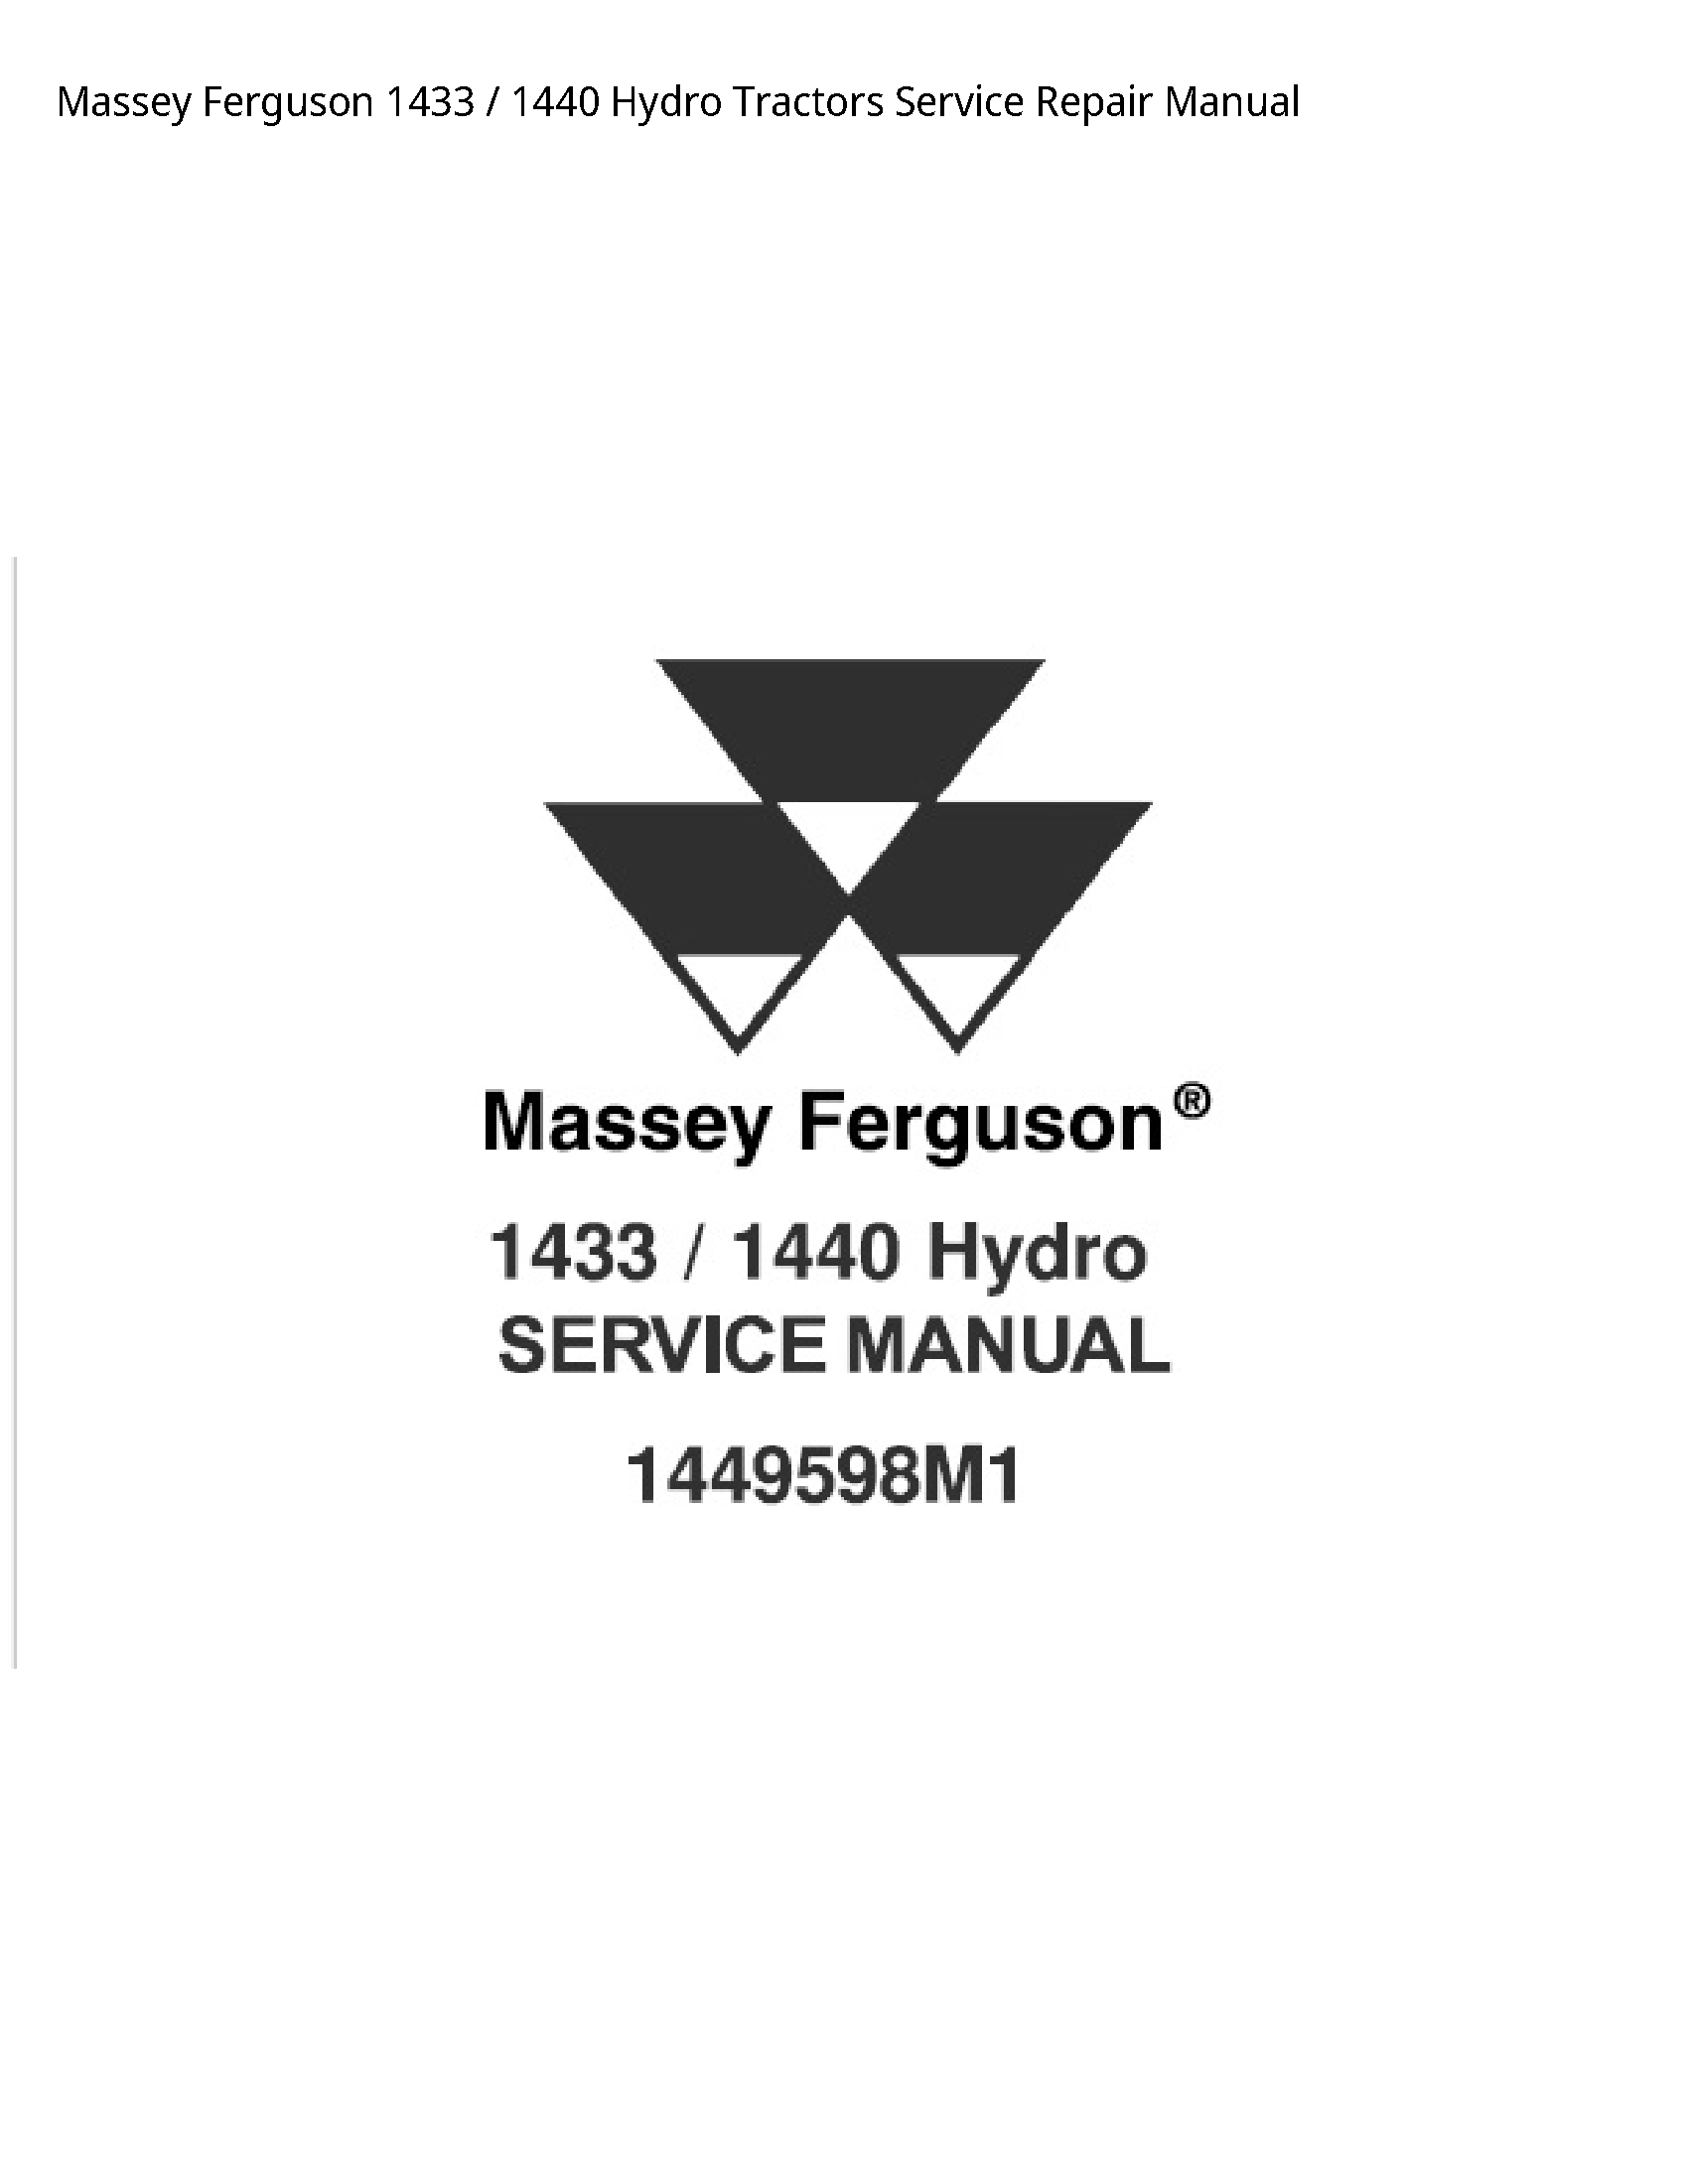 Massey Ferguson 1433 Hydro Tractors manual